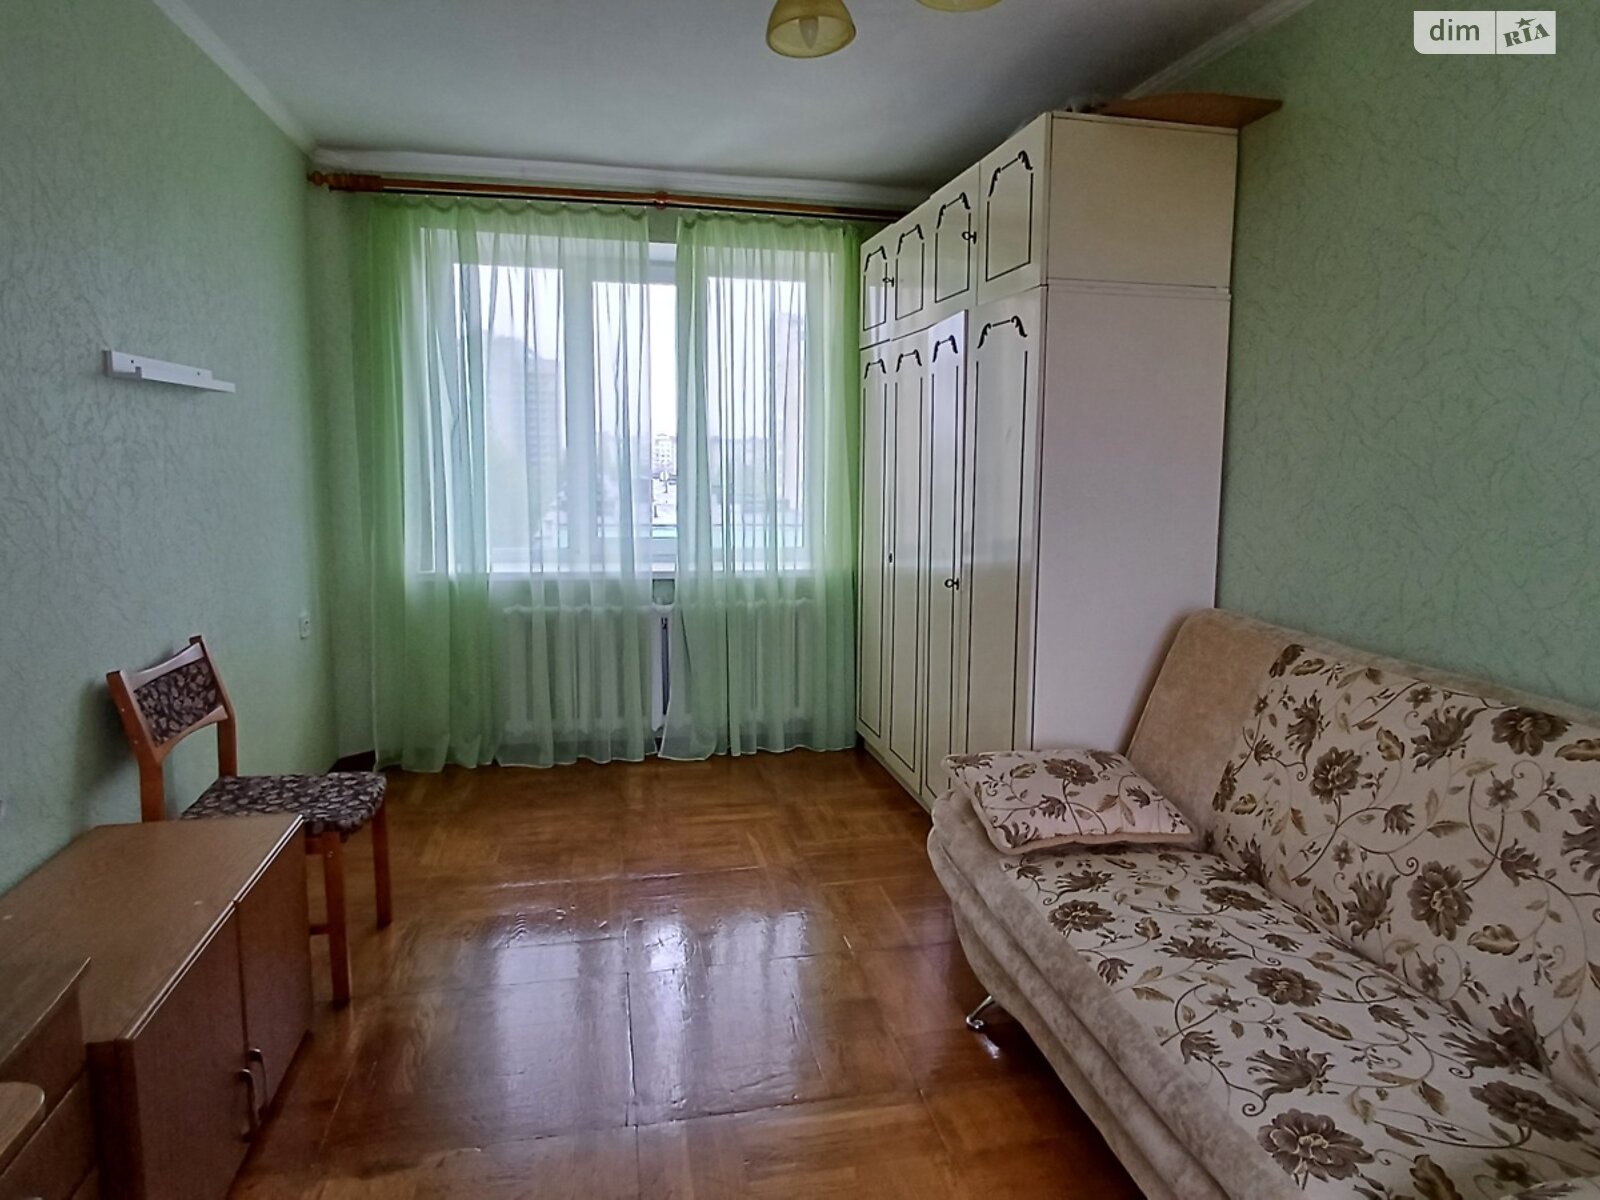 Продажа четырехкомнатной квартиры в Чернигове, на ул. Шевчука 4, район Градецкий фото 1